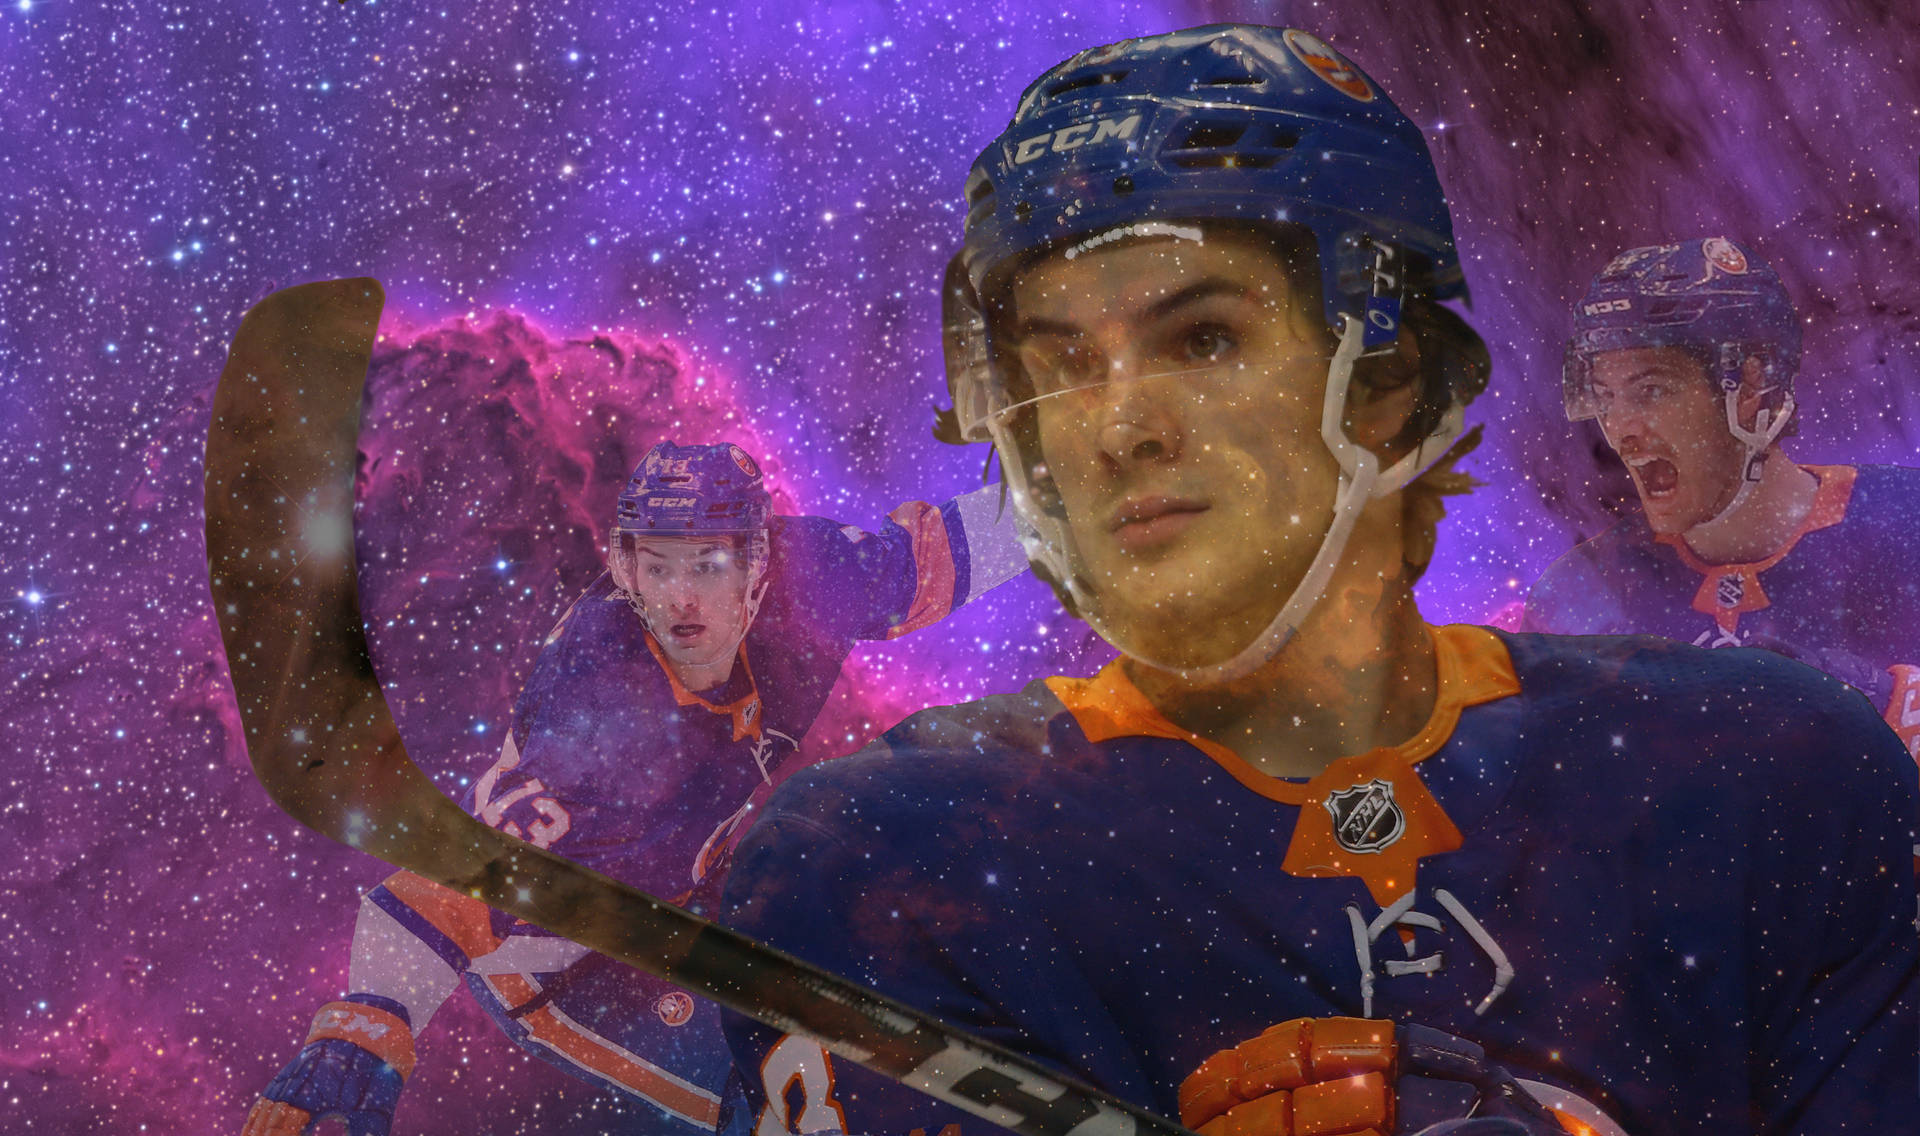 Canadian Ice Hockey Player Mathew Barzal Portrait Digital Art Wallpaper